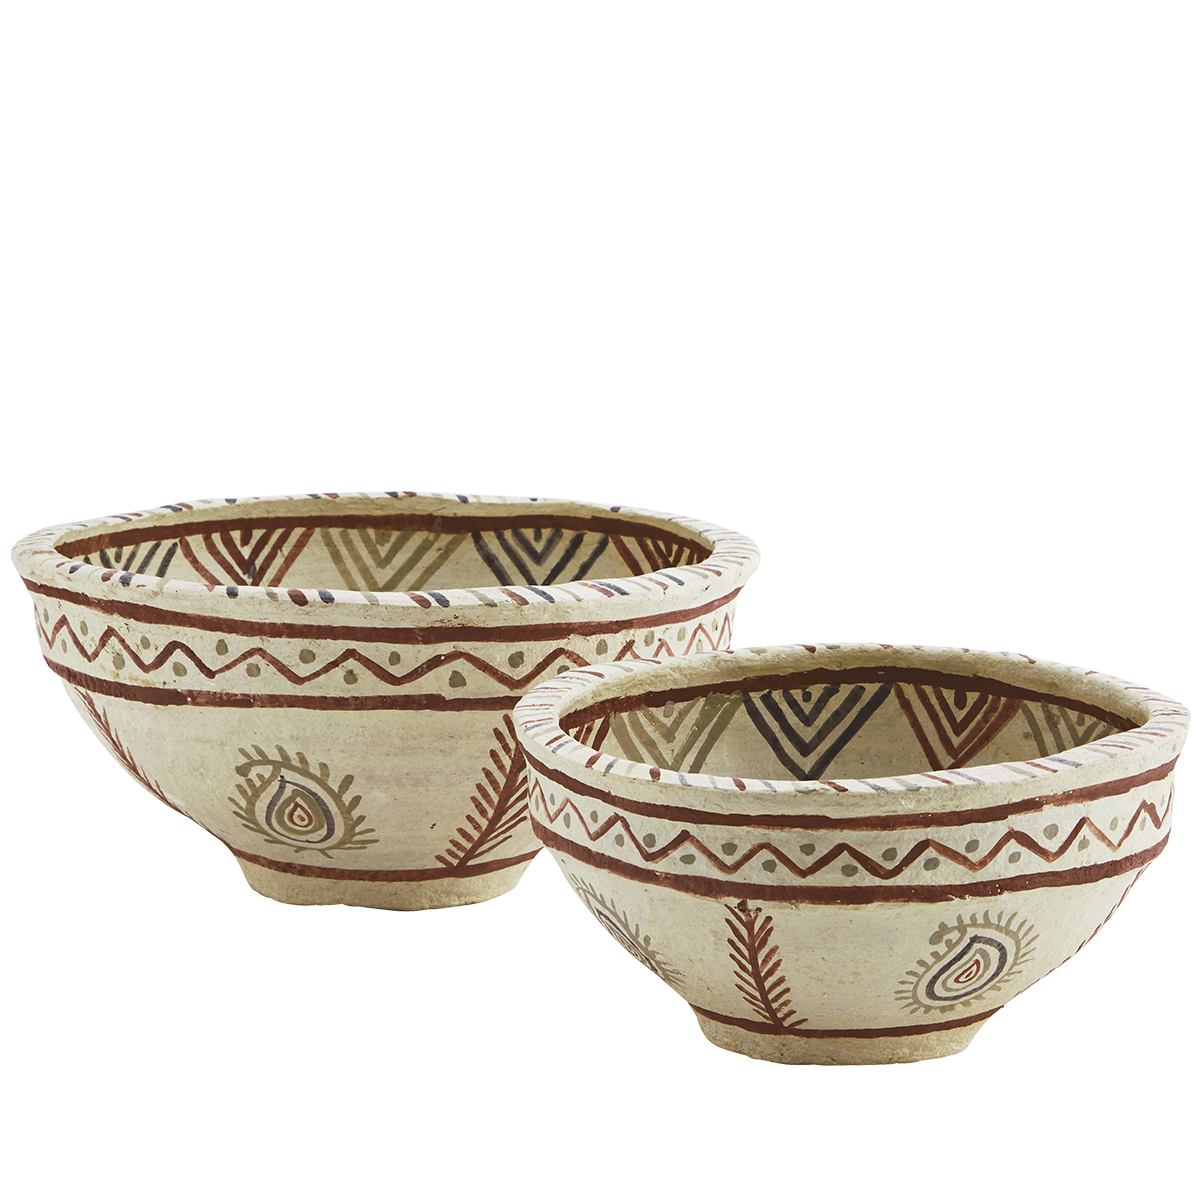 Handpainted paper mache bowls